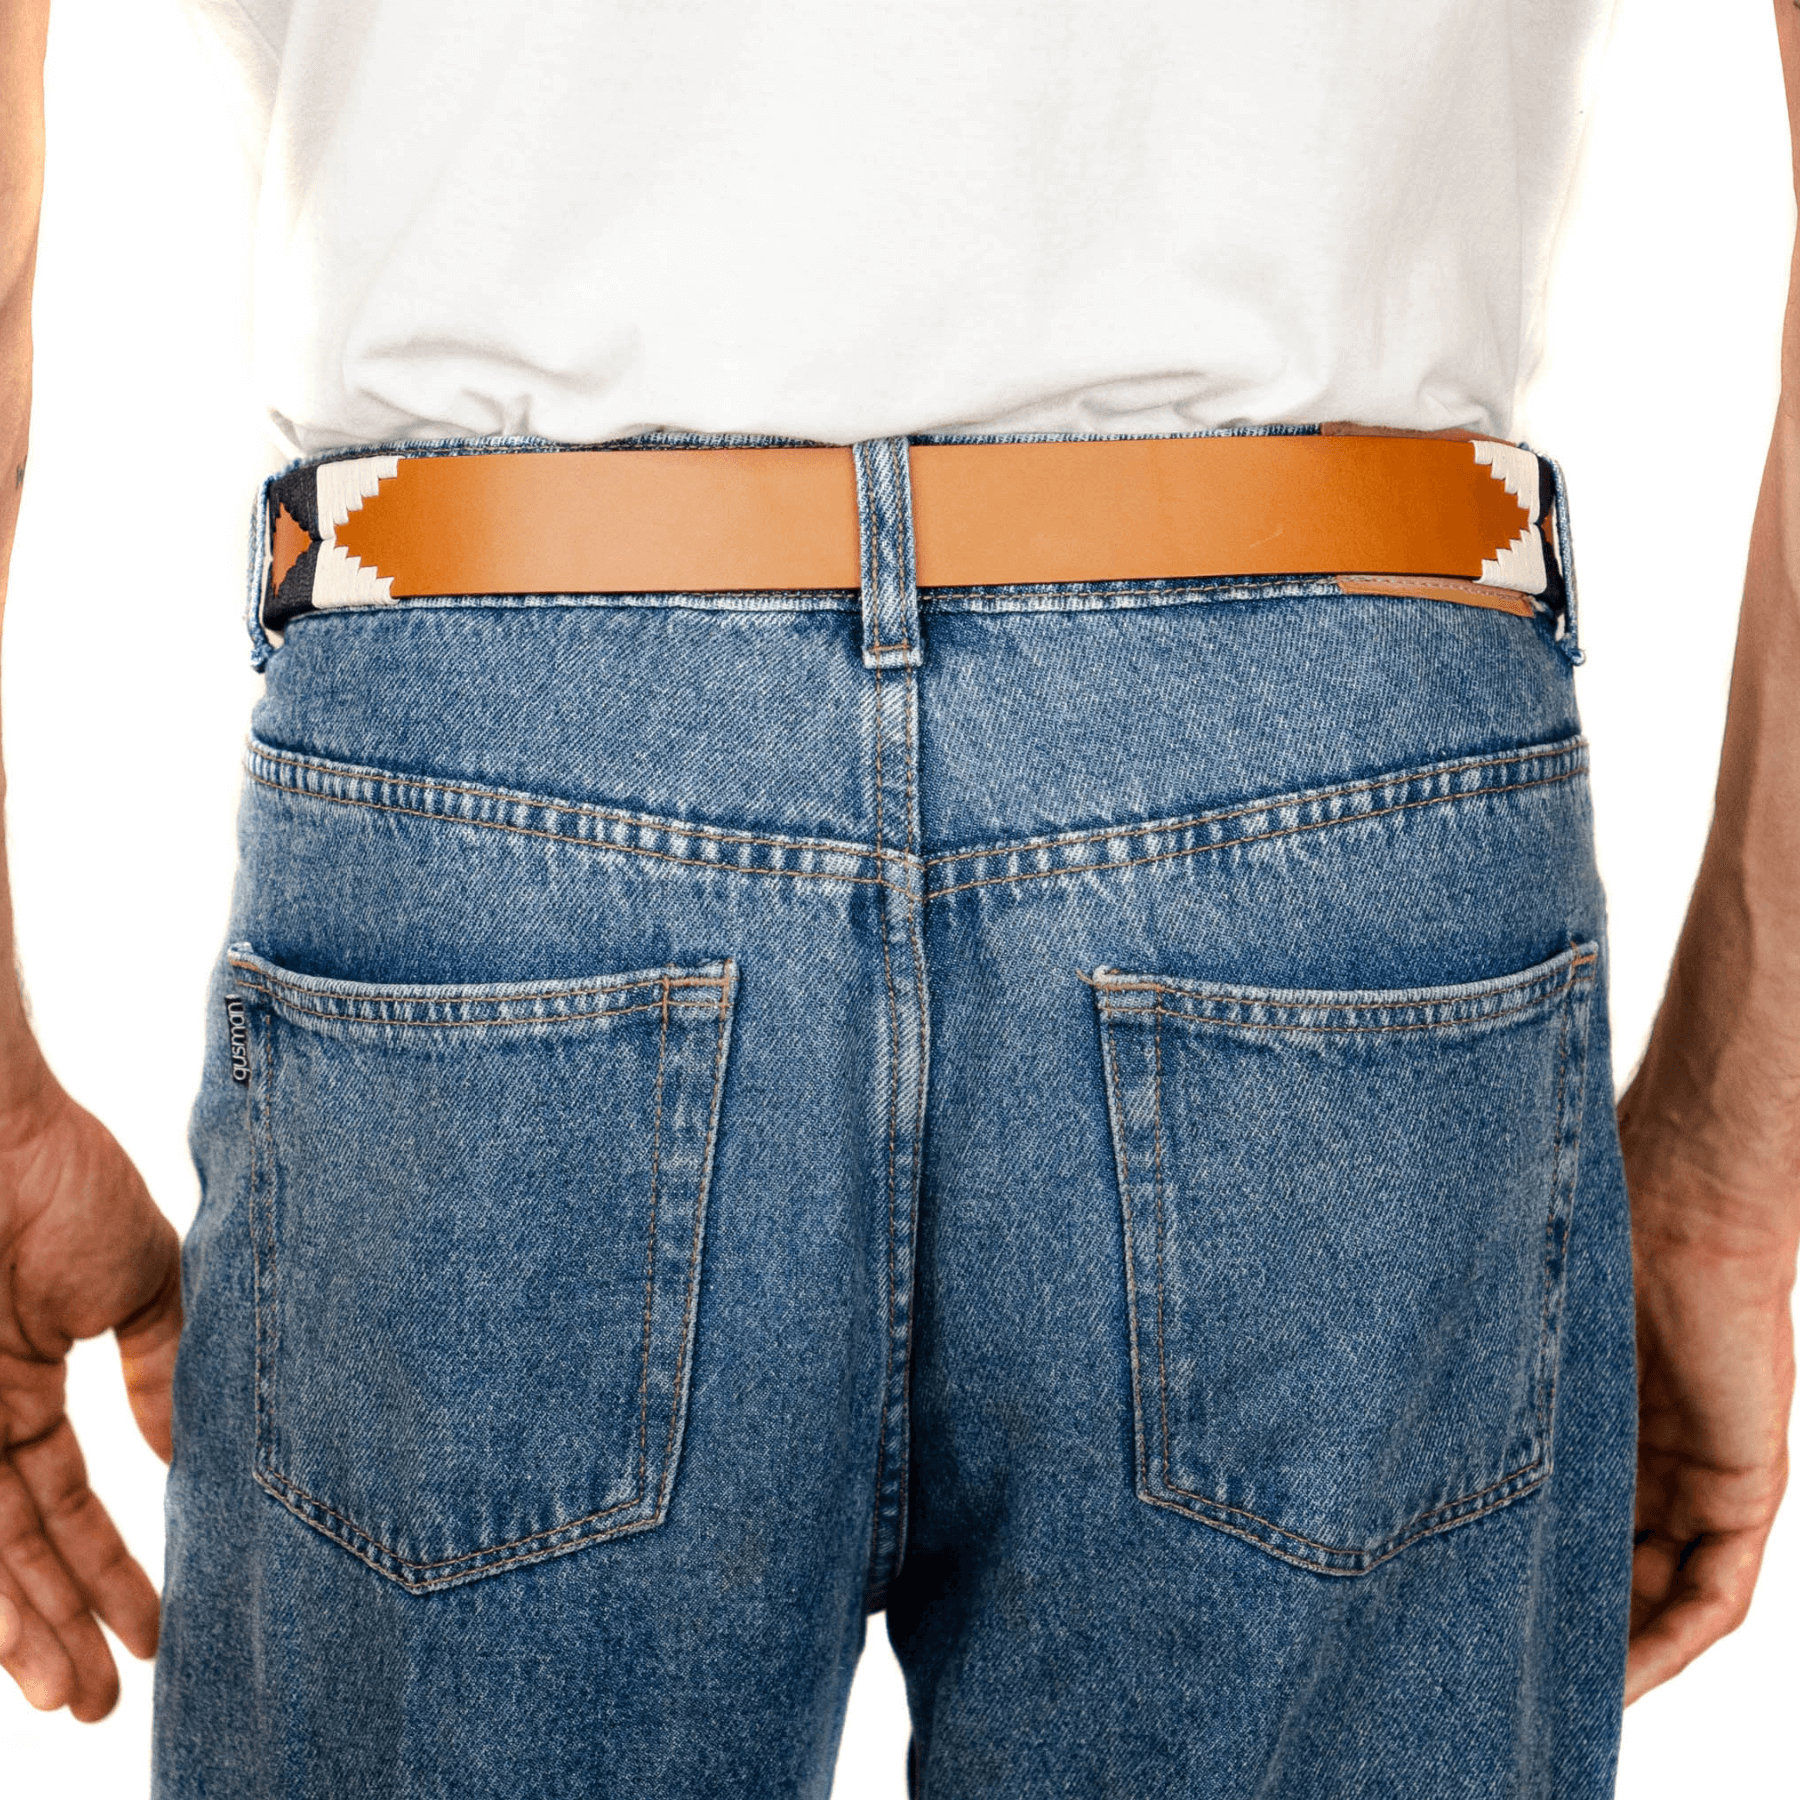 Gaucholife Belts Embroidered Belt (Tan/Blue/White)